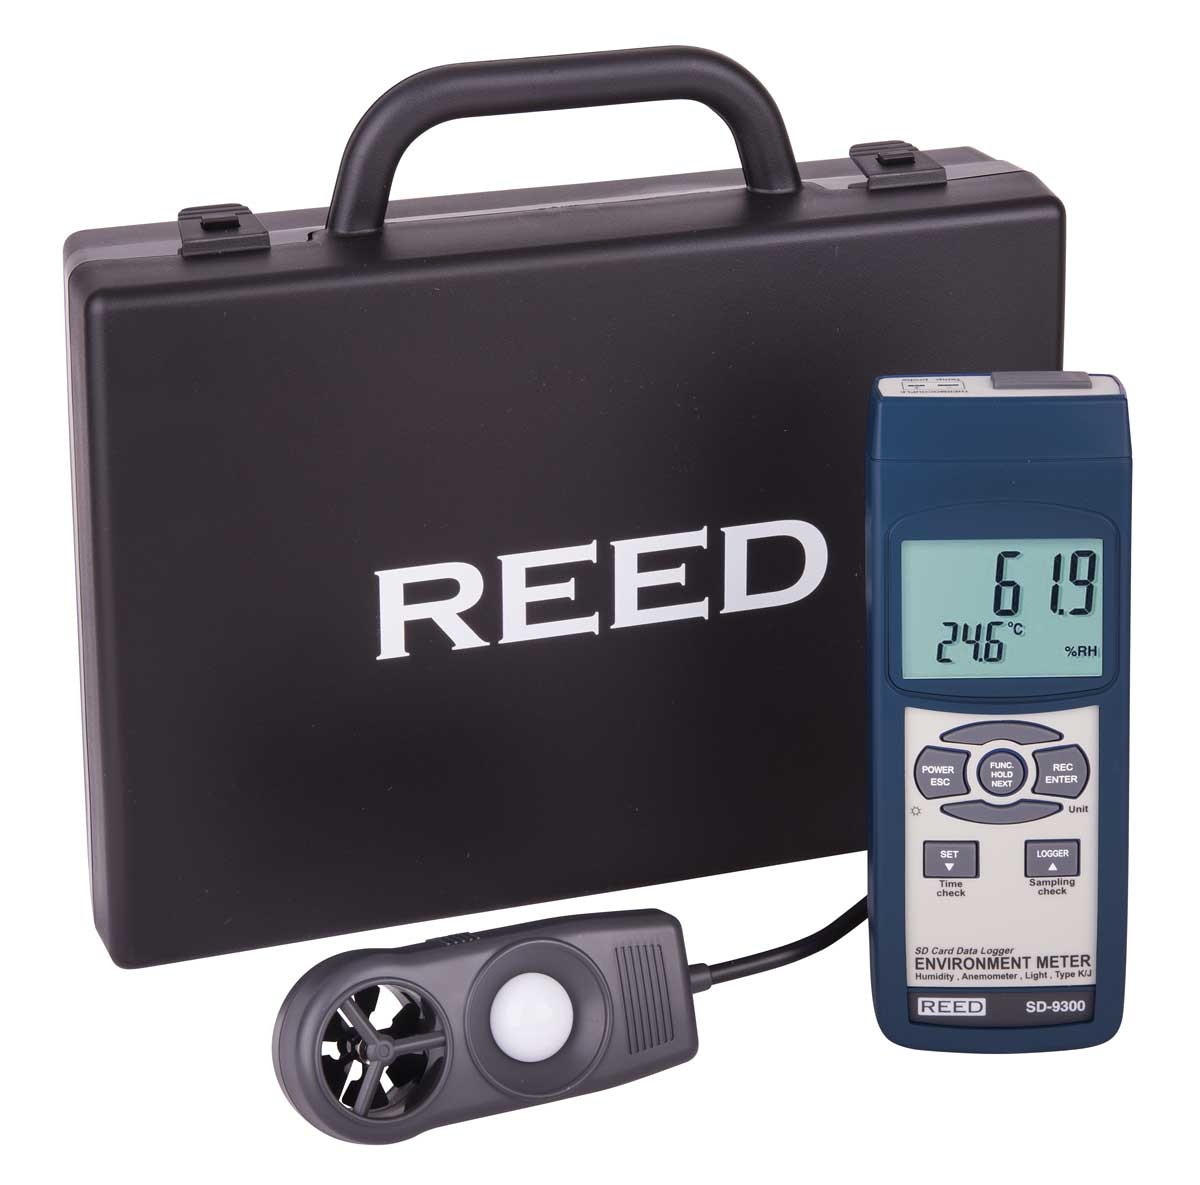 Reed Instruments Sd 9300 Environmental Meter Data Logger Reed Sd 9300 4